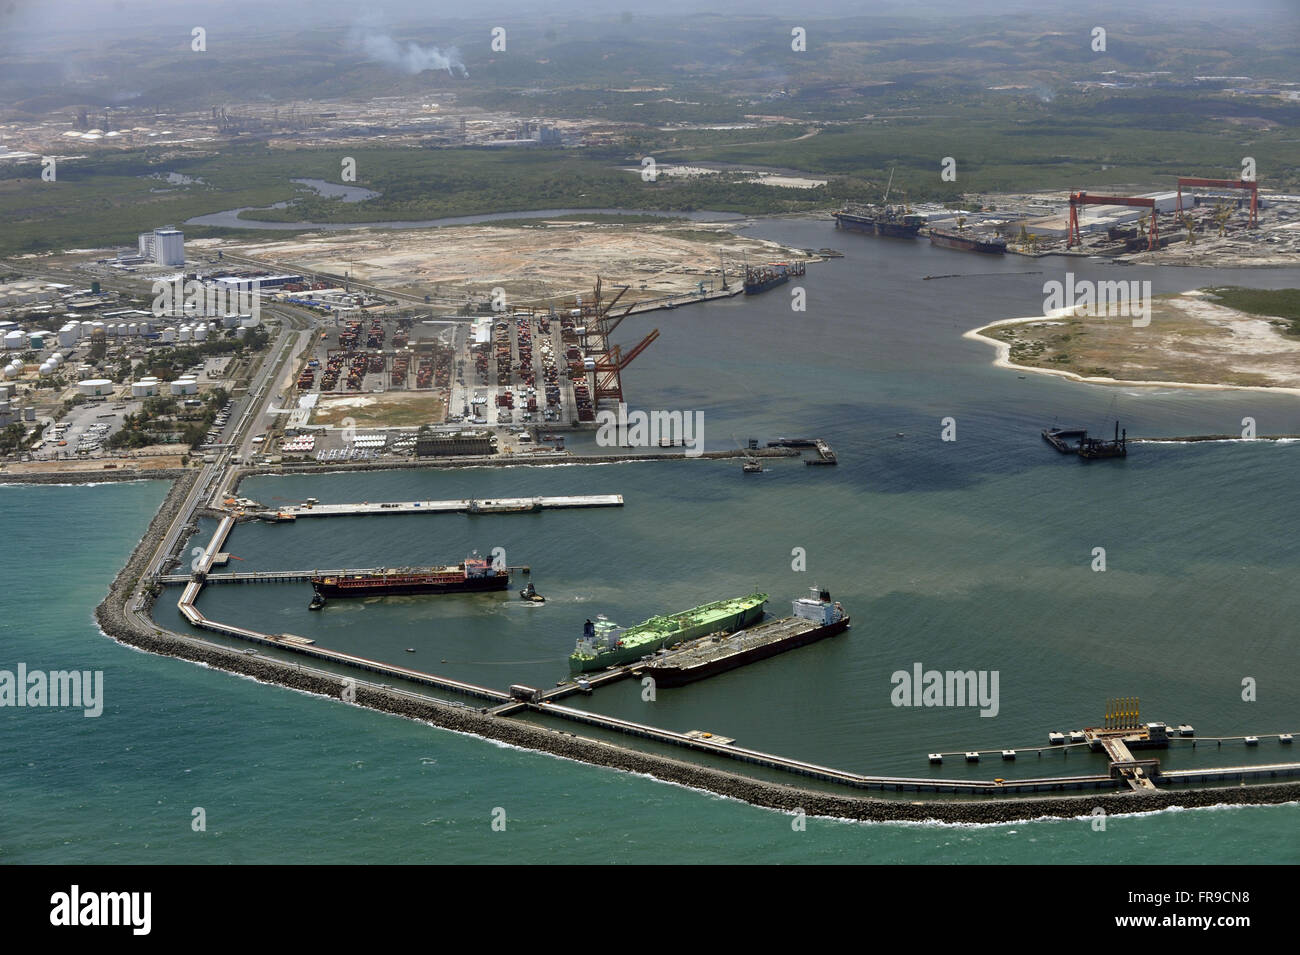 Aerial view of Port of Suape the bottom right Atlantico Sul Shipyard Stock Photo